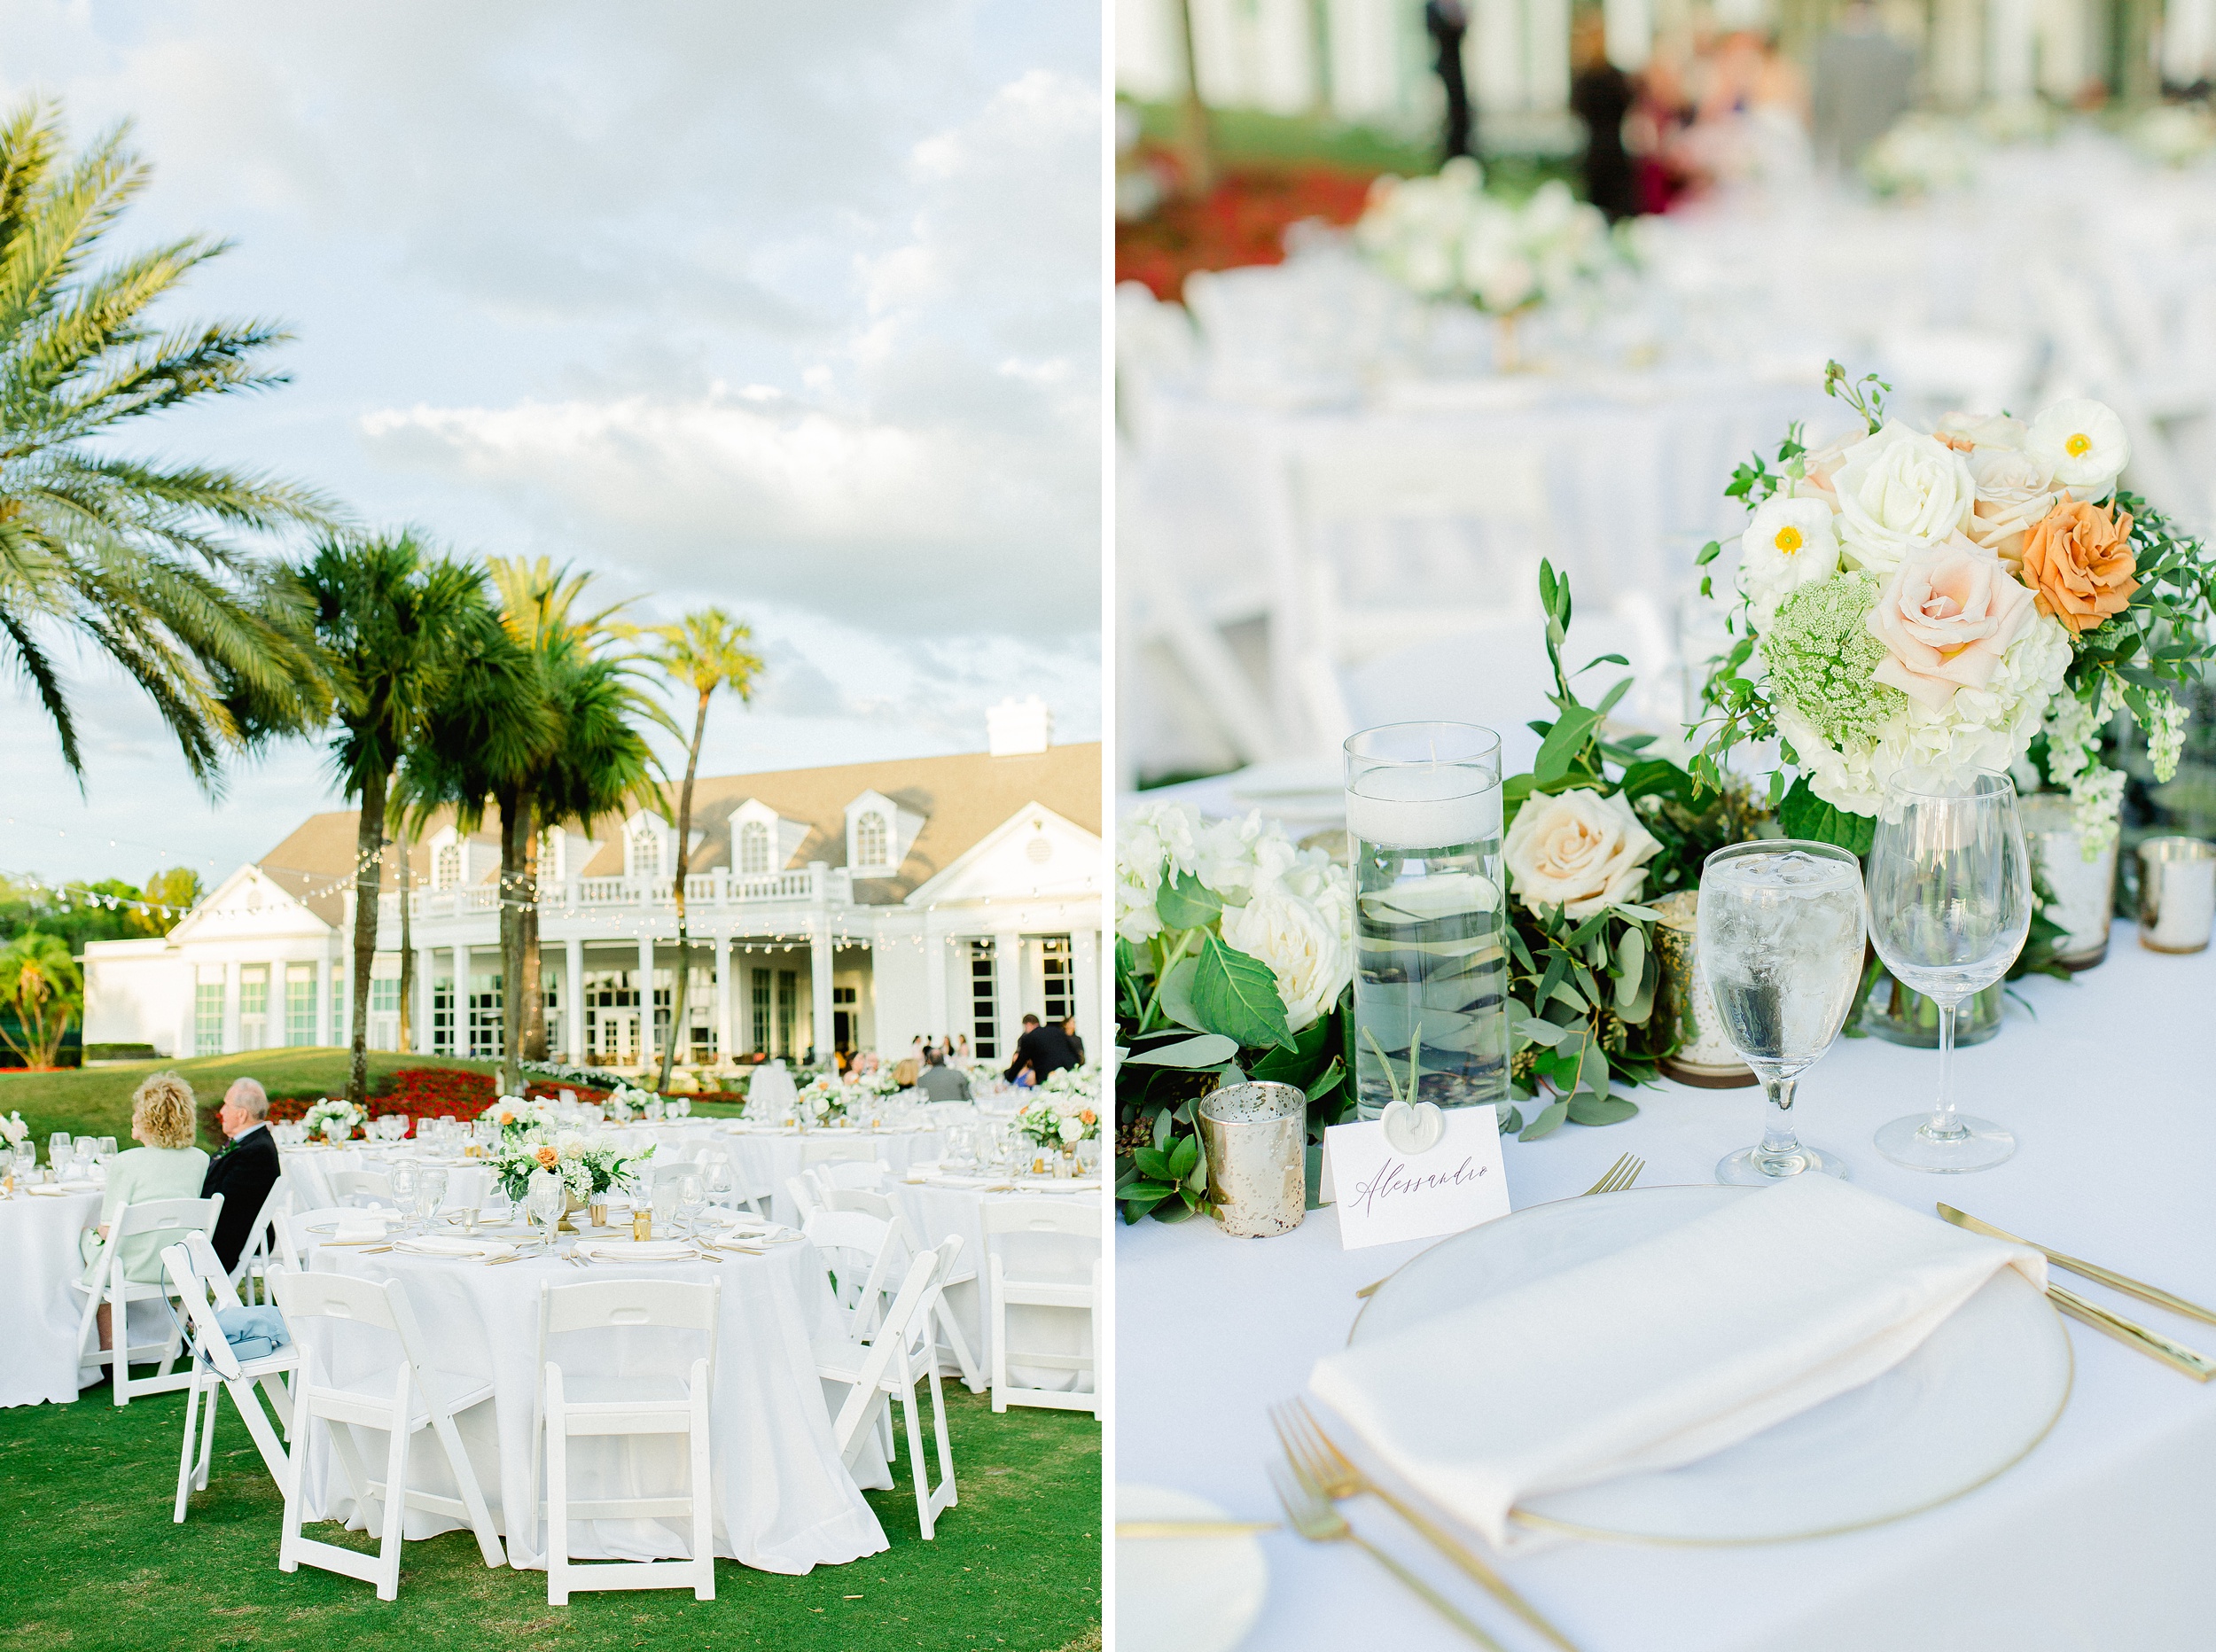 Palma Ceia Country Club Wedding | © Ailyn La Torre Photography 2020